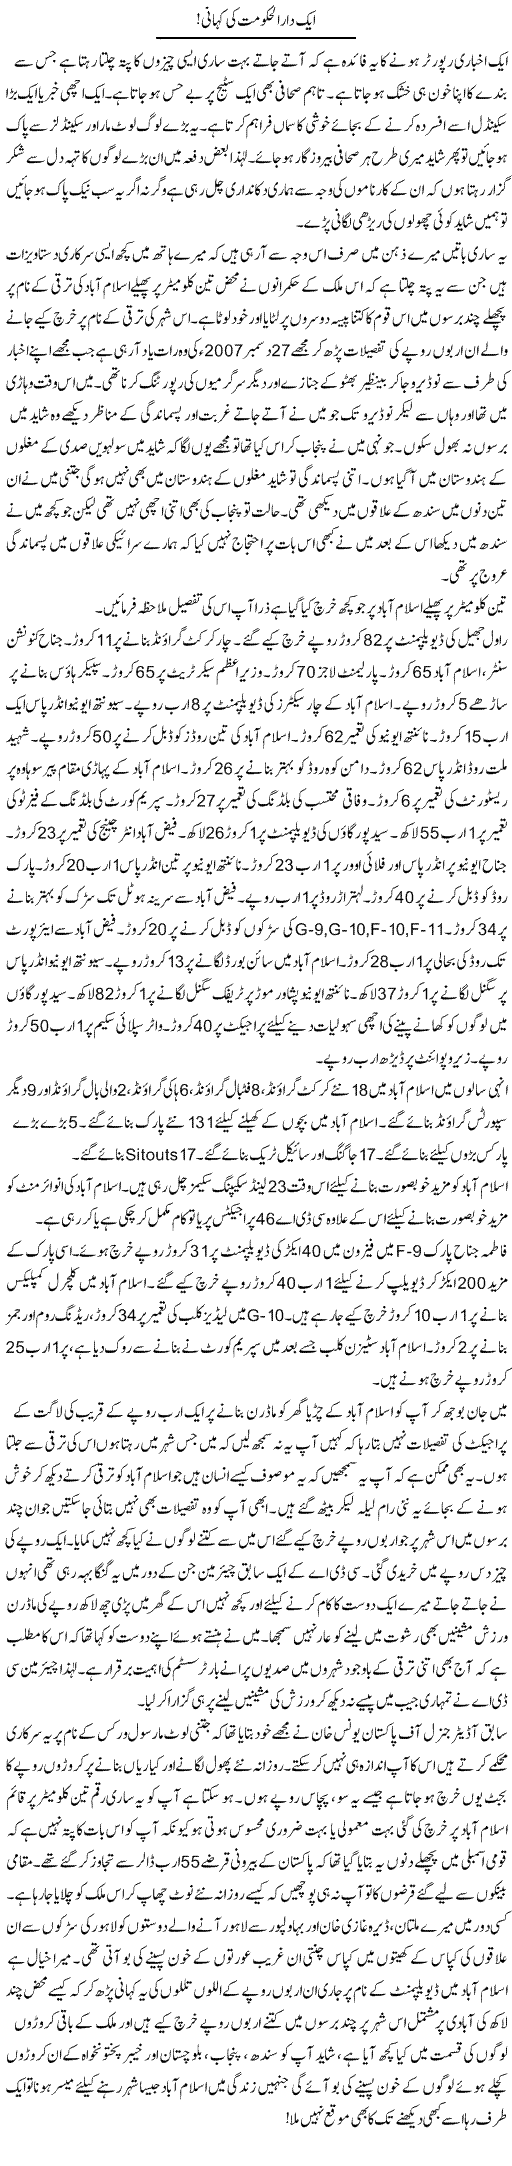 Story of Islamabad Express Column Rauf Klasra 24 March 2011